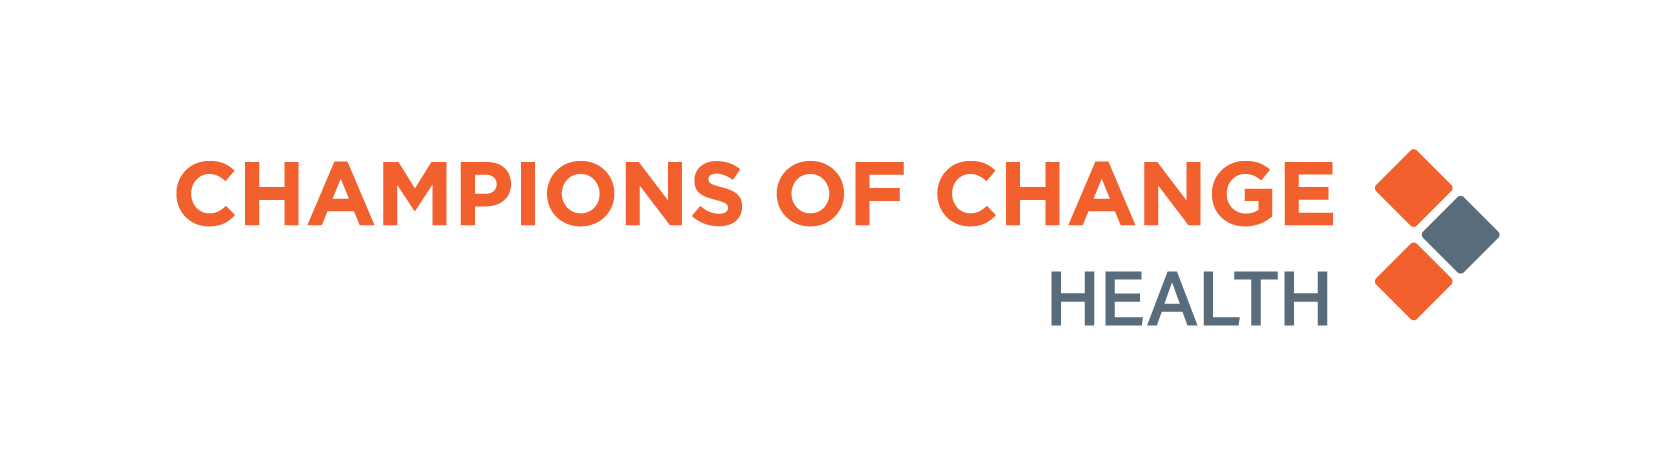 Champions of Change Health Group Logo